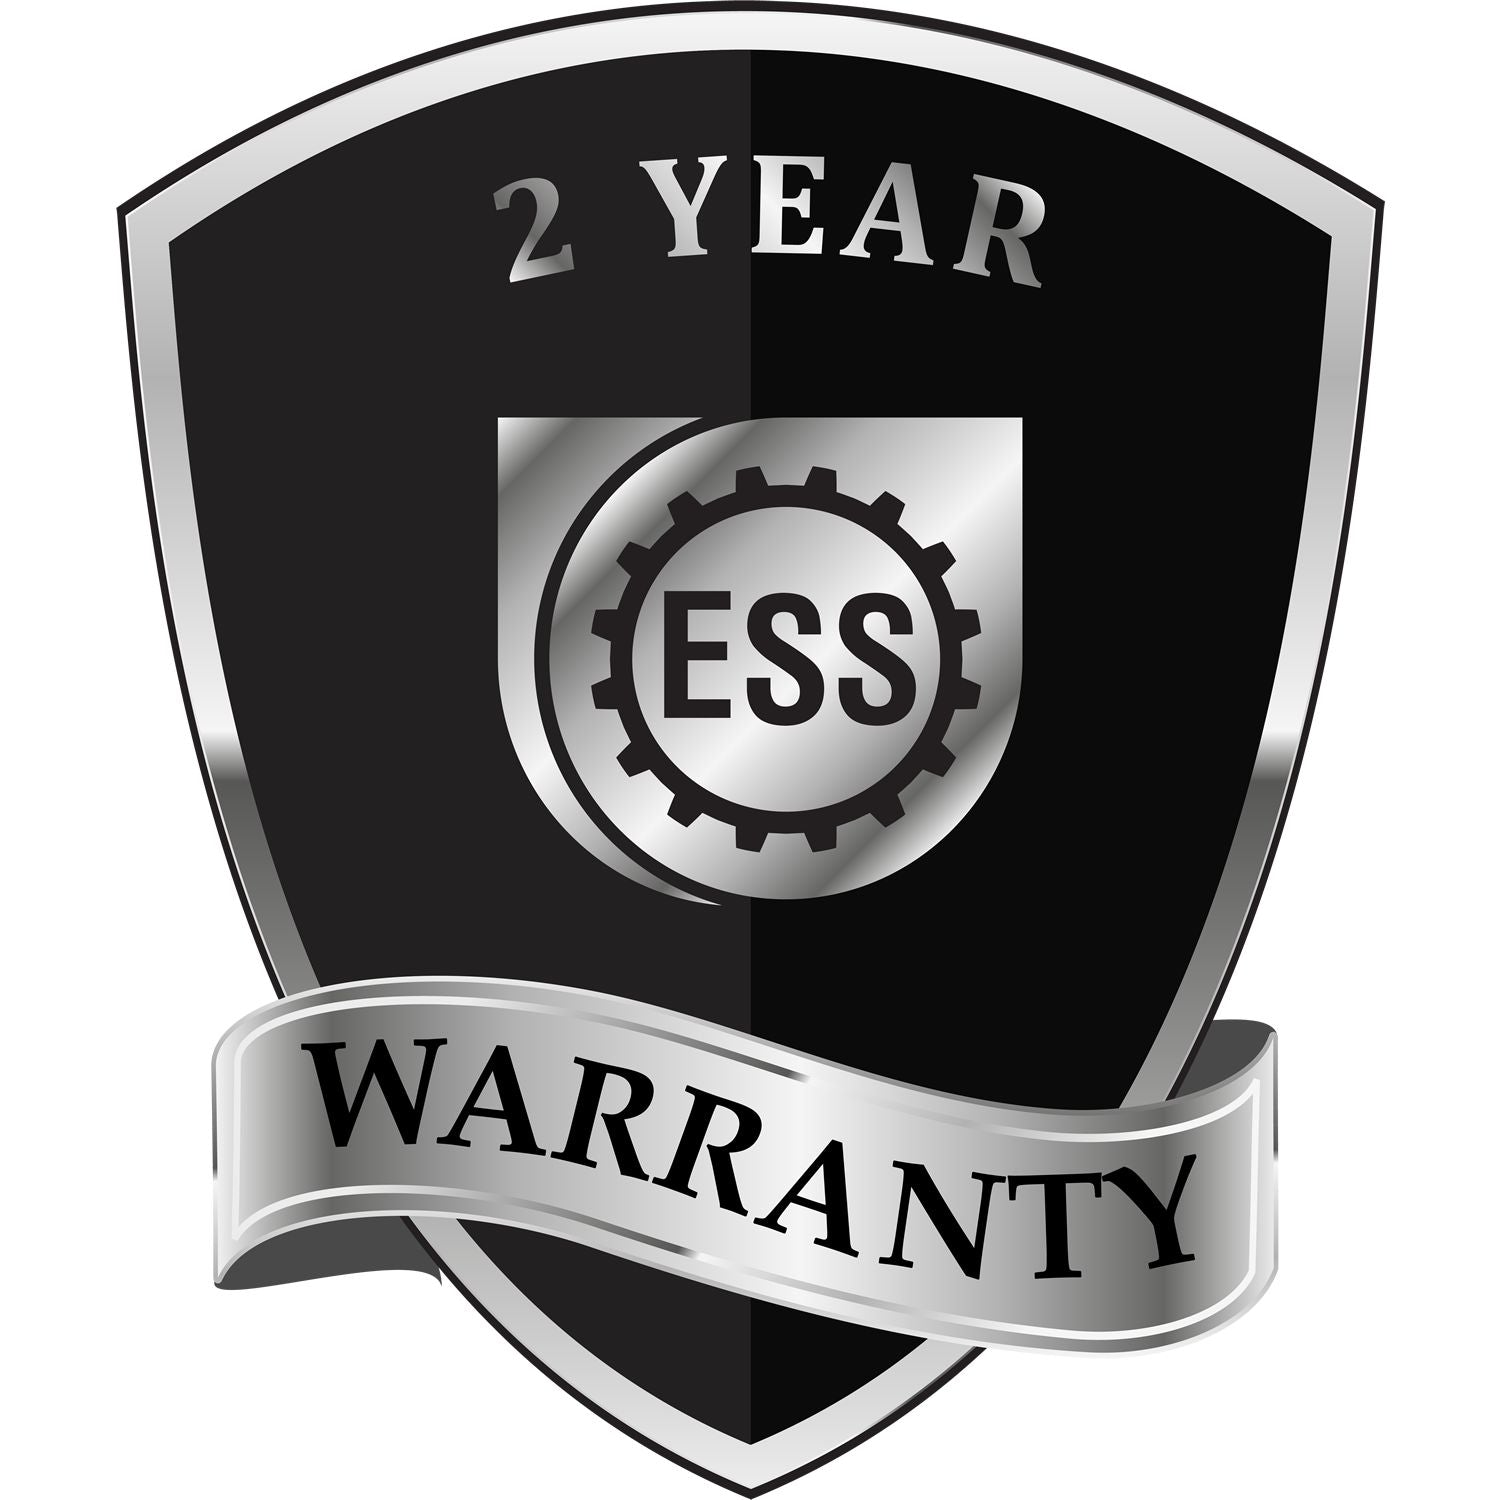 A black and silver badge or emblem showing warranty information for the Hybrid Alabama Landscape Architect Seal